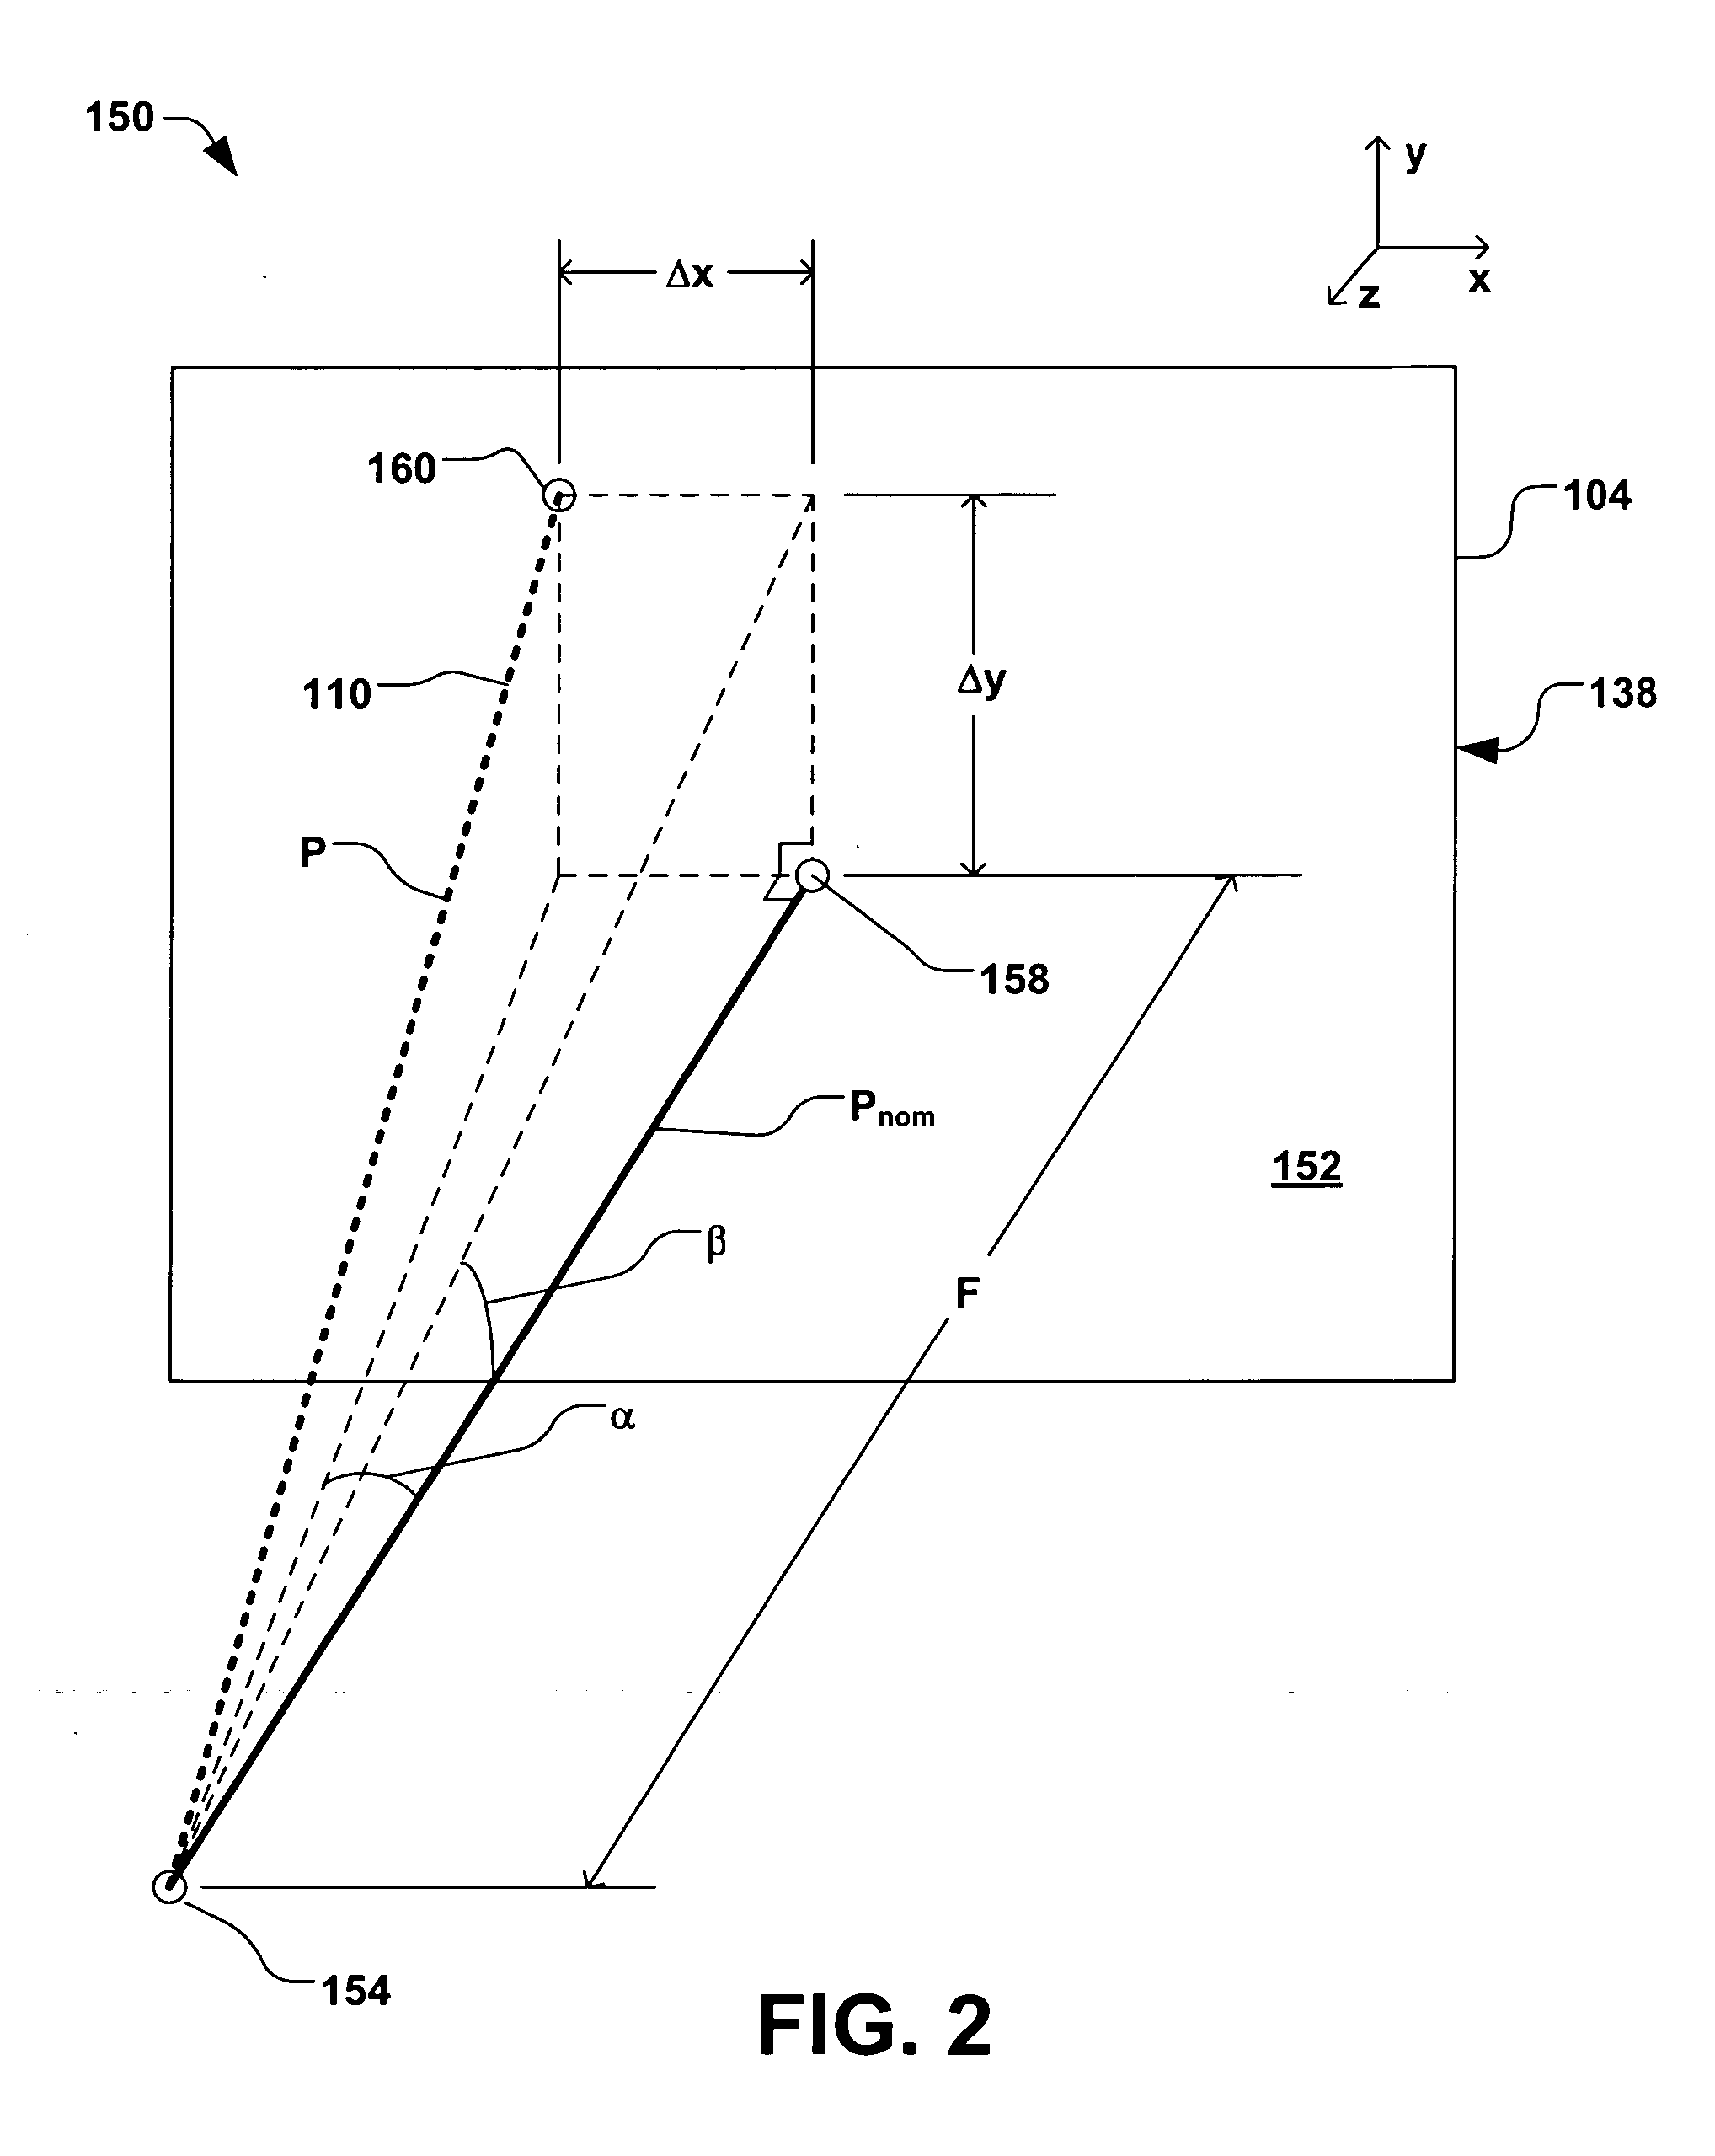 Method of measuring ion beam position